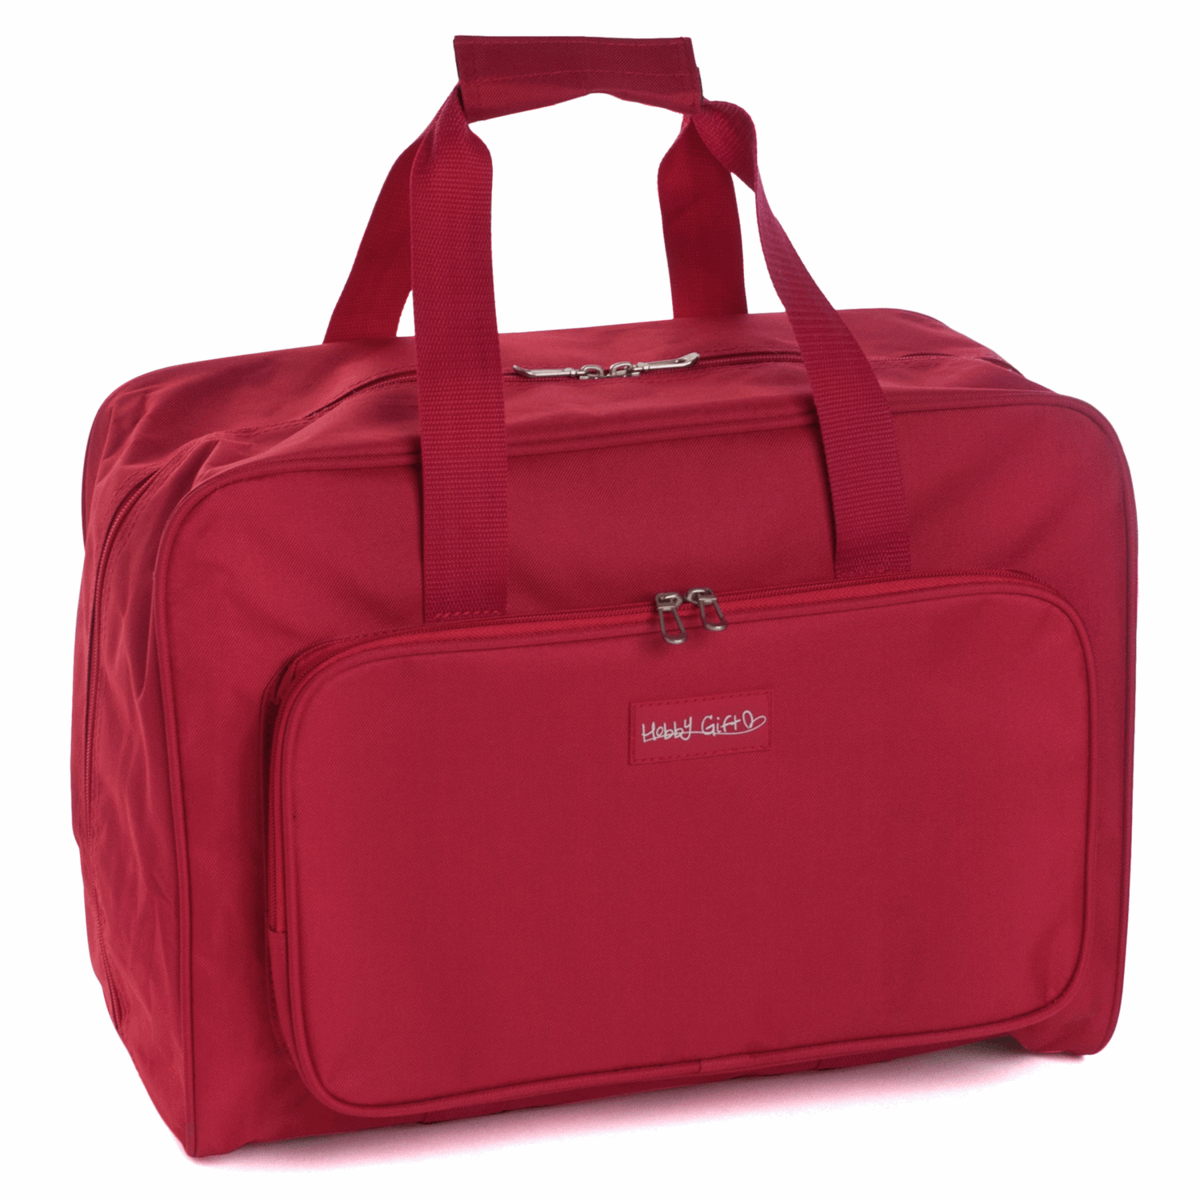 Luxury Sewing Machine Bag - Red